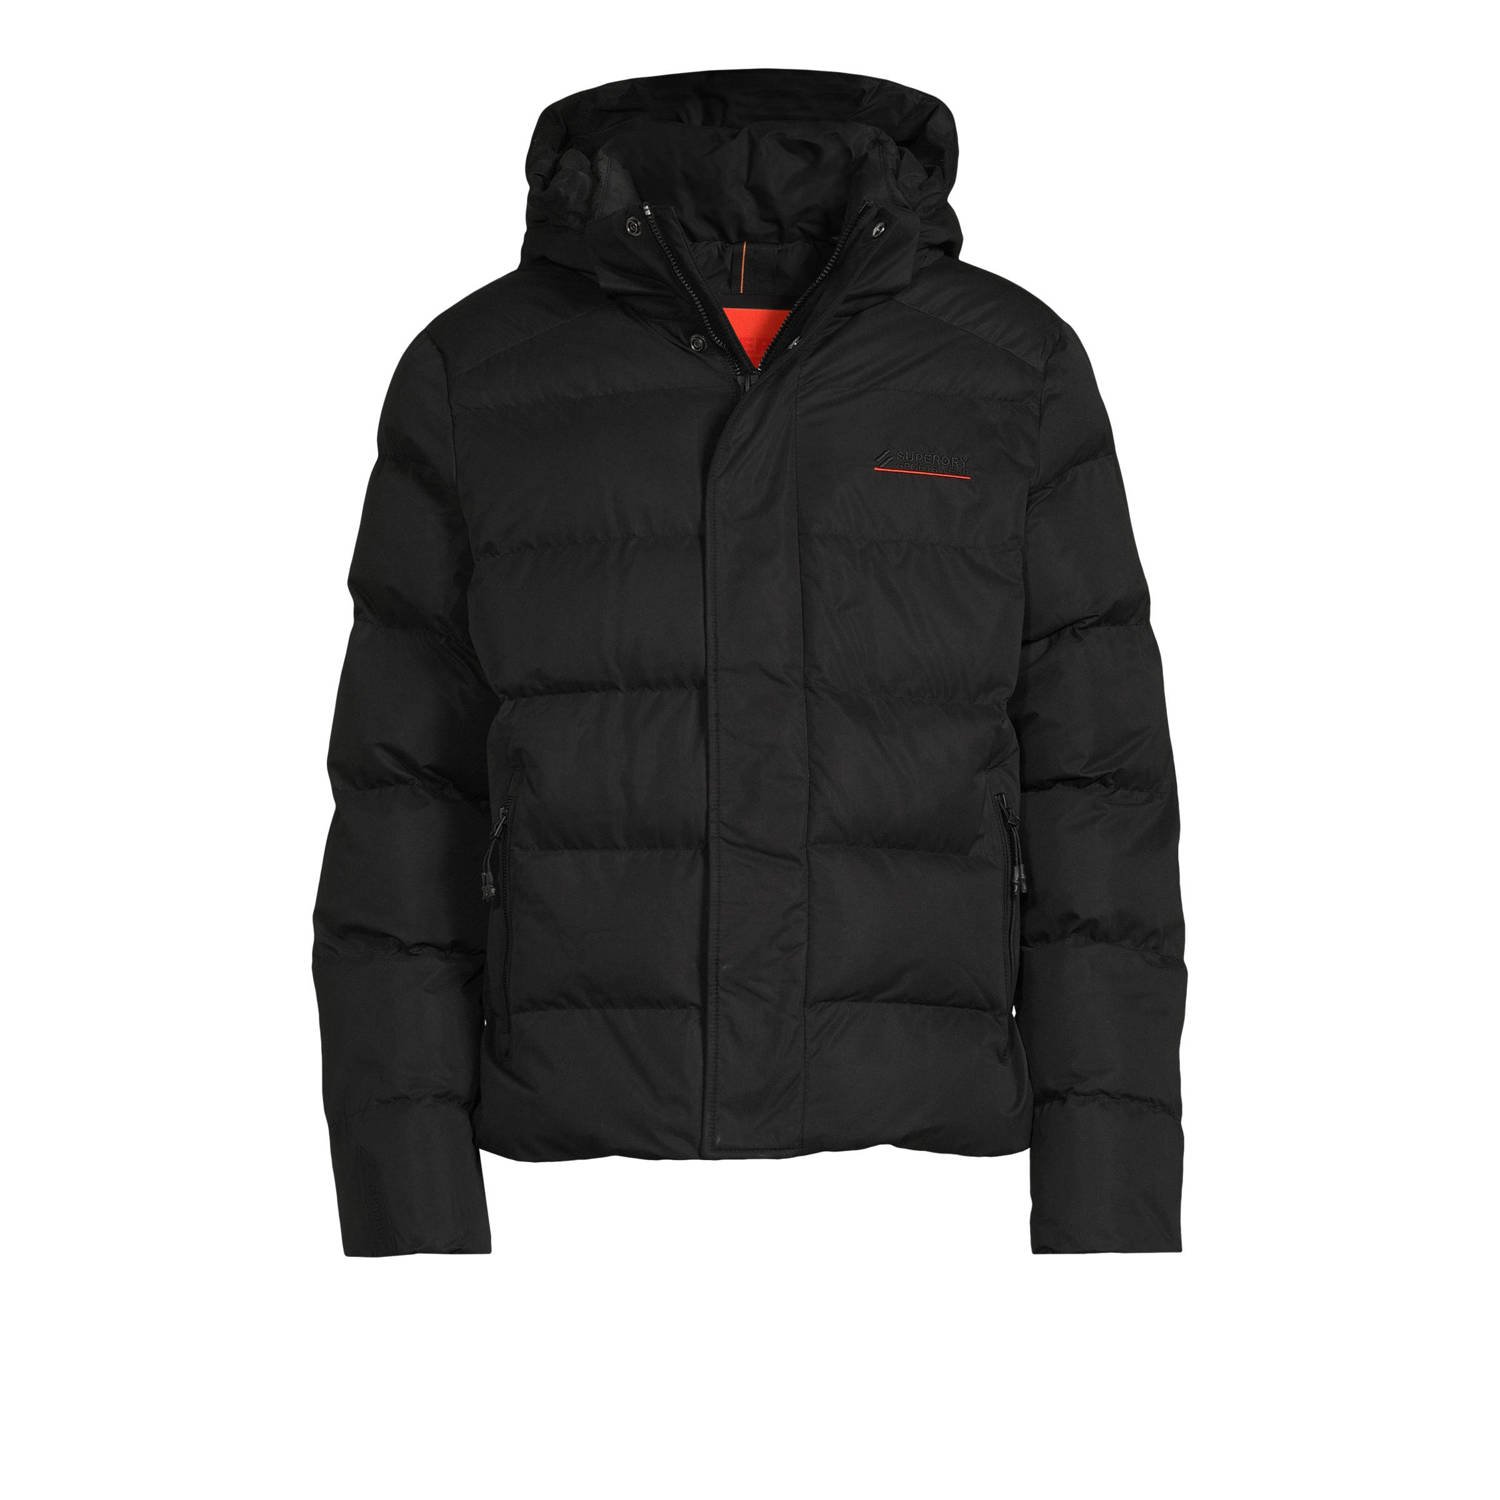 Superdry gewatteerde jas met logo zwart